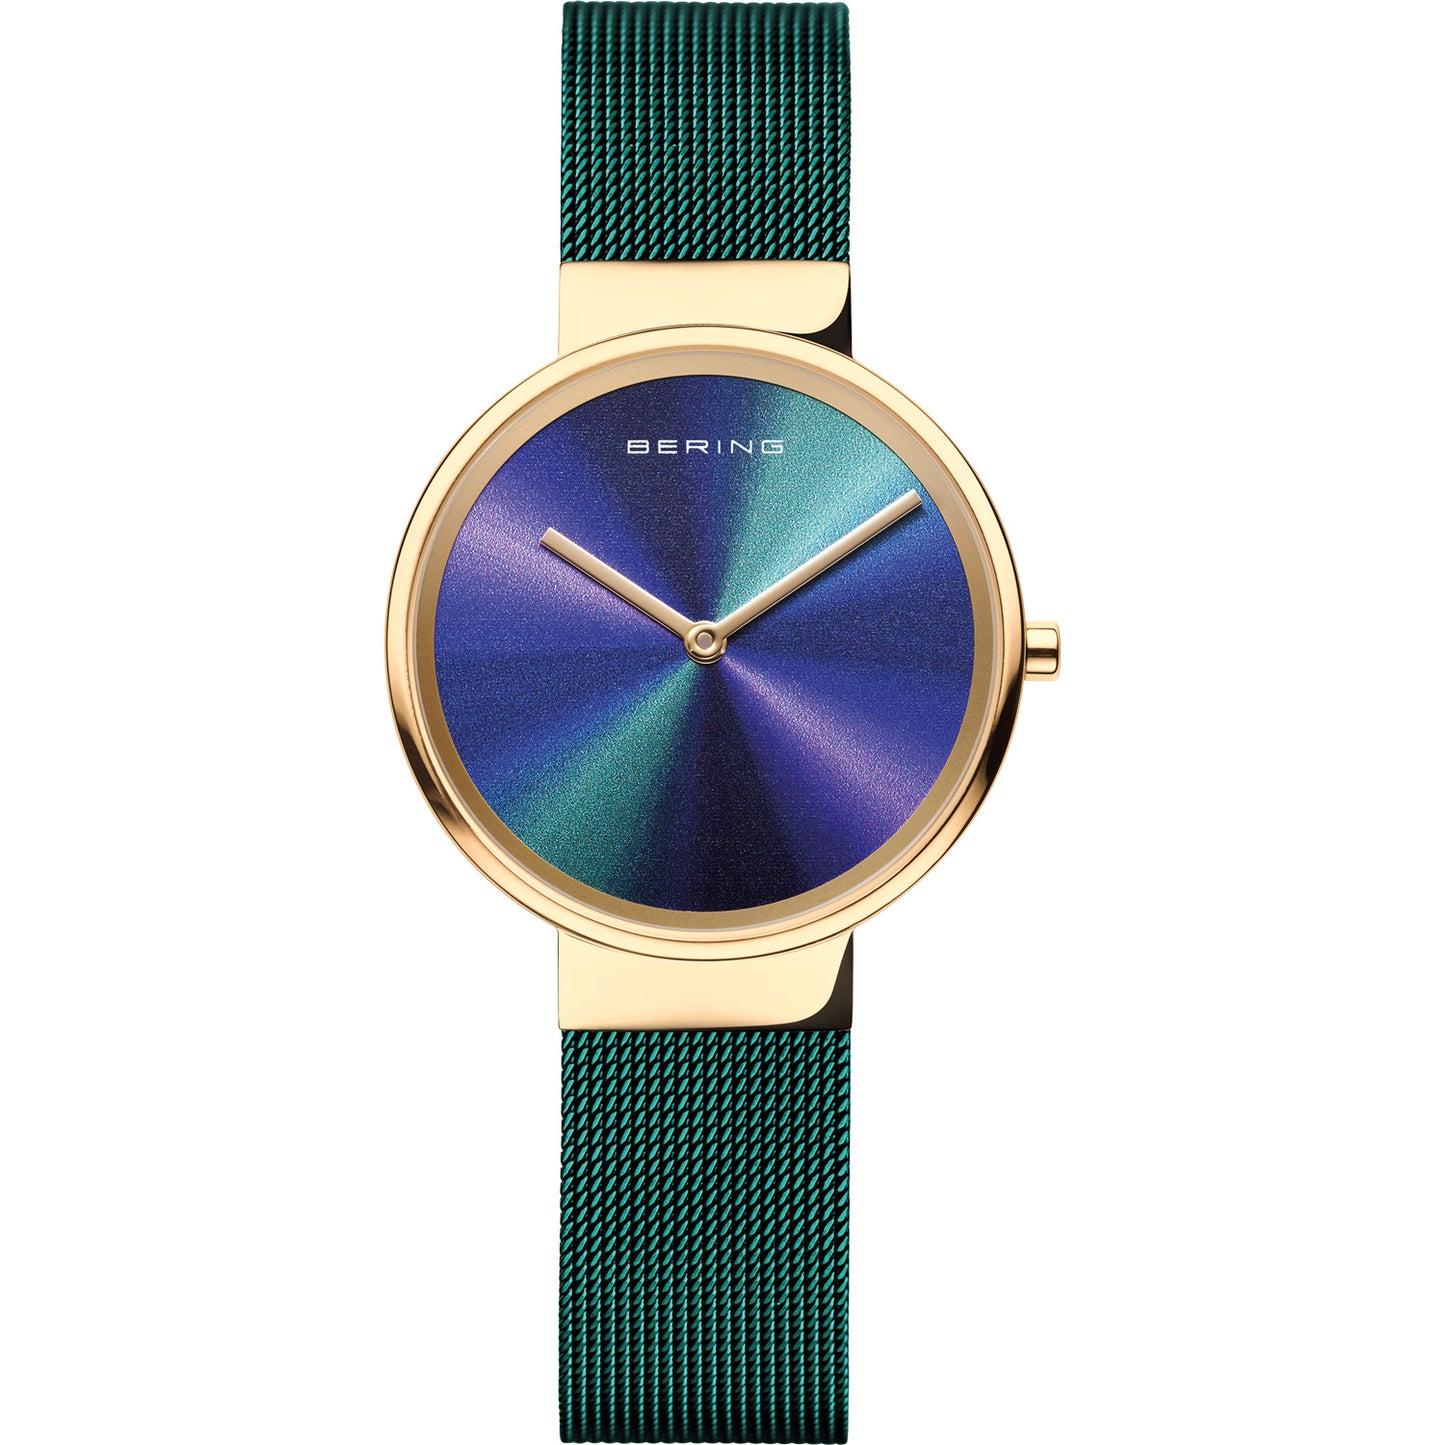 Bering-Armbanduhr gold grün lila APAUB42215 - Schmuck & Uhren Andrea Panick